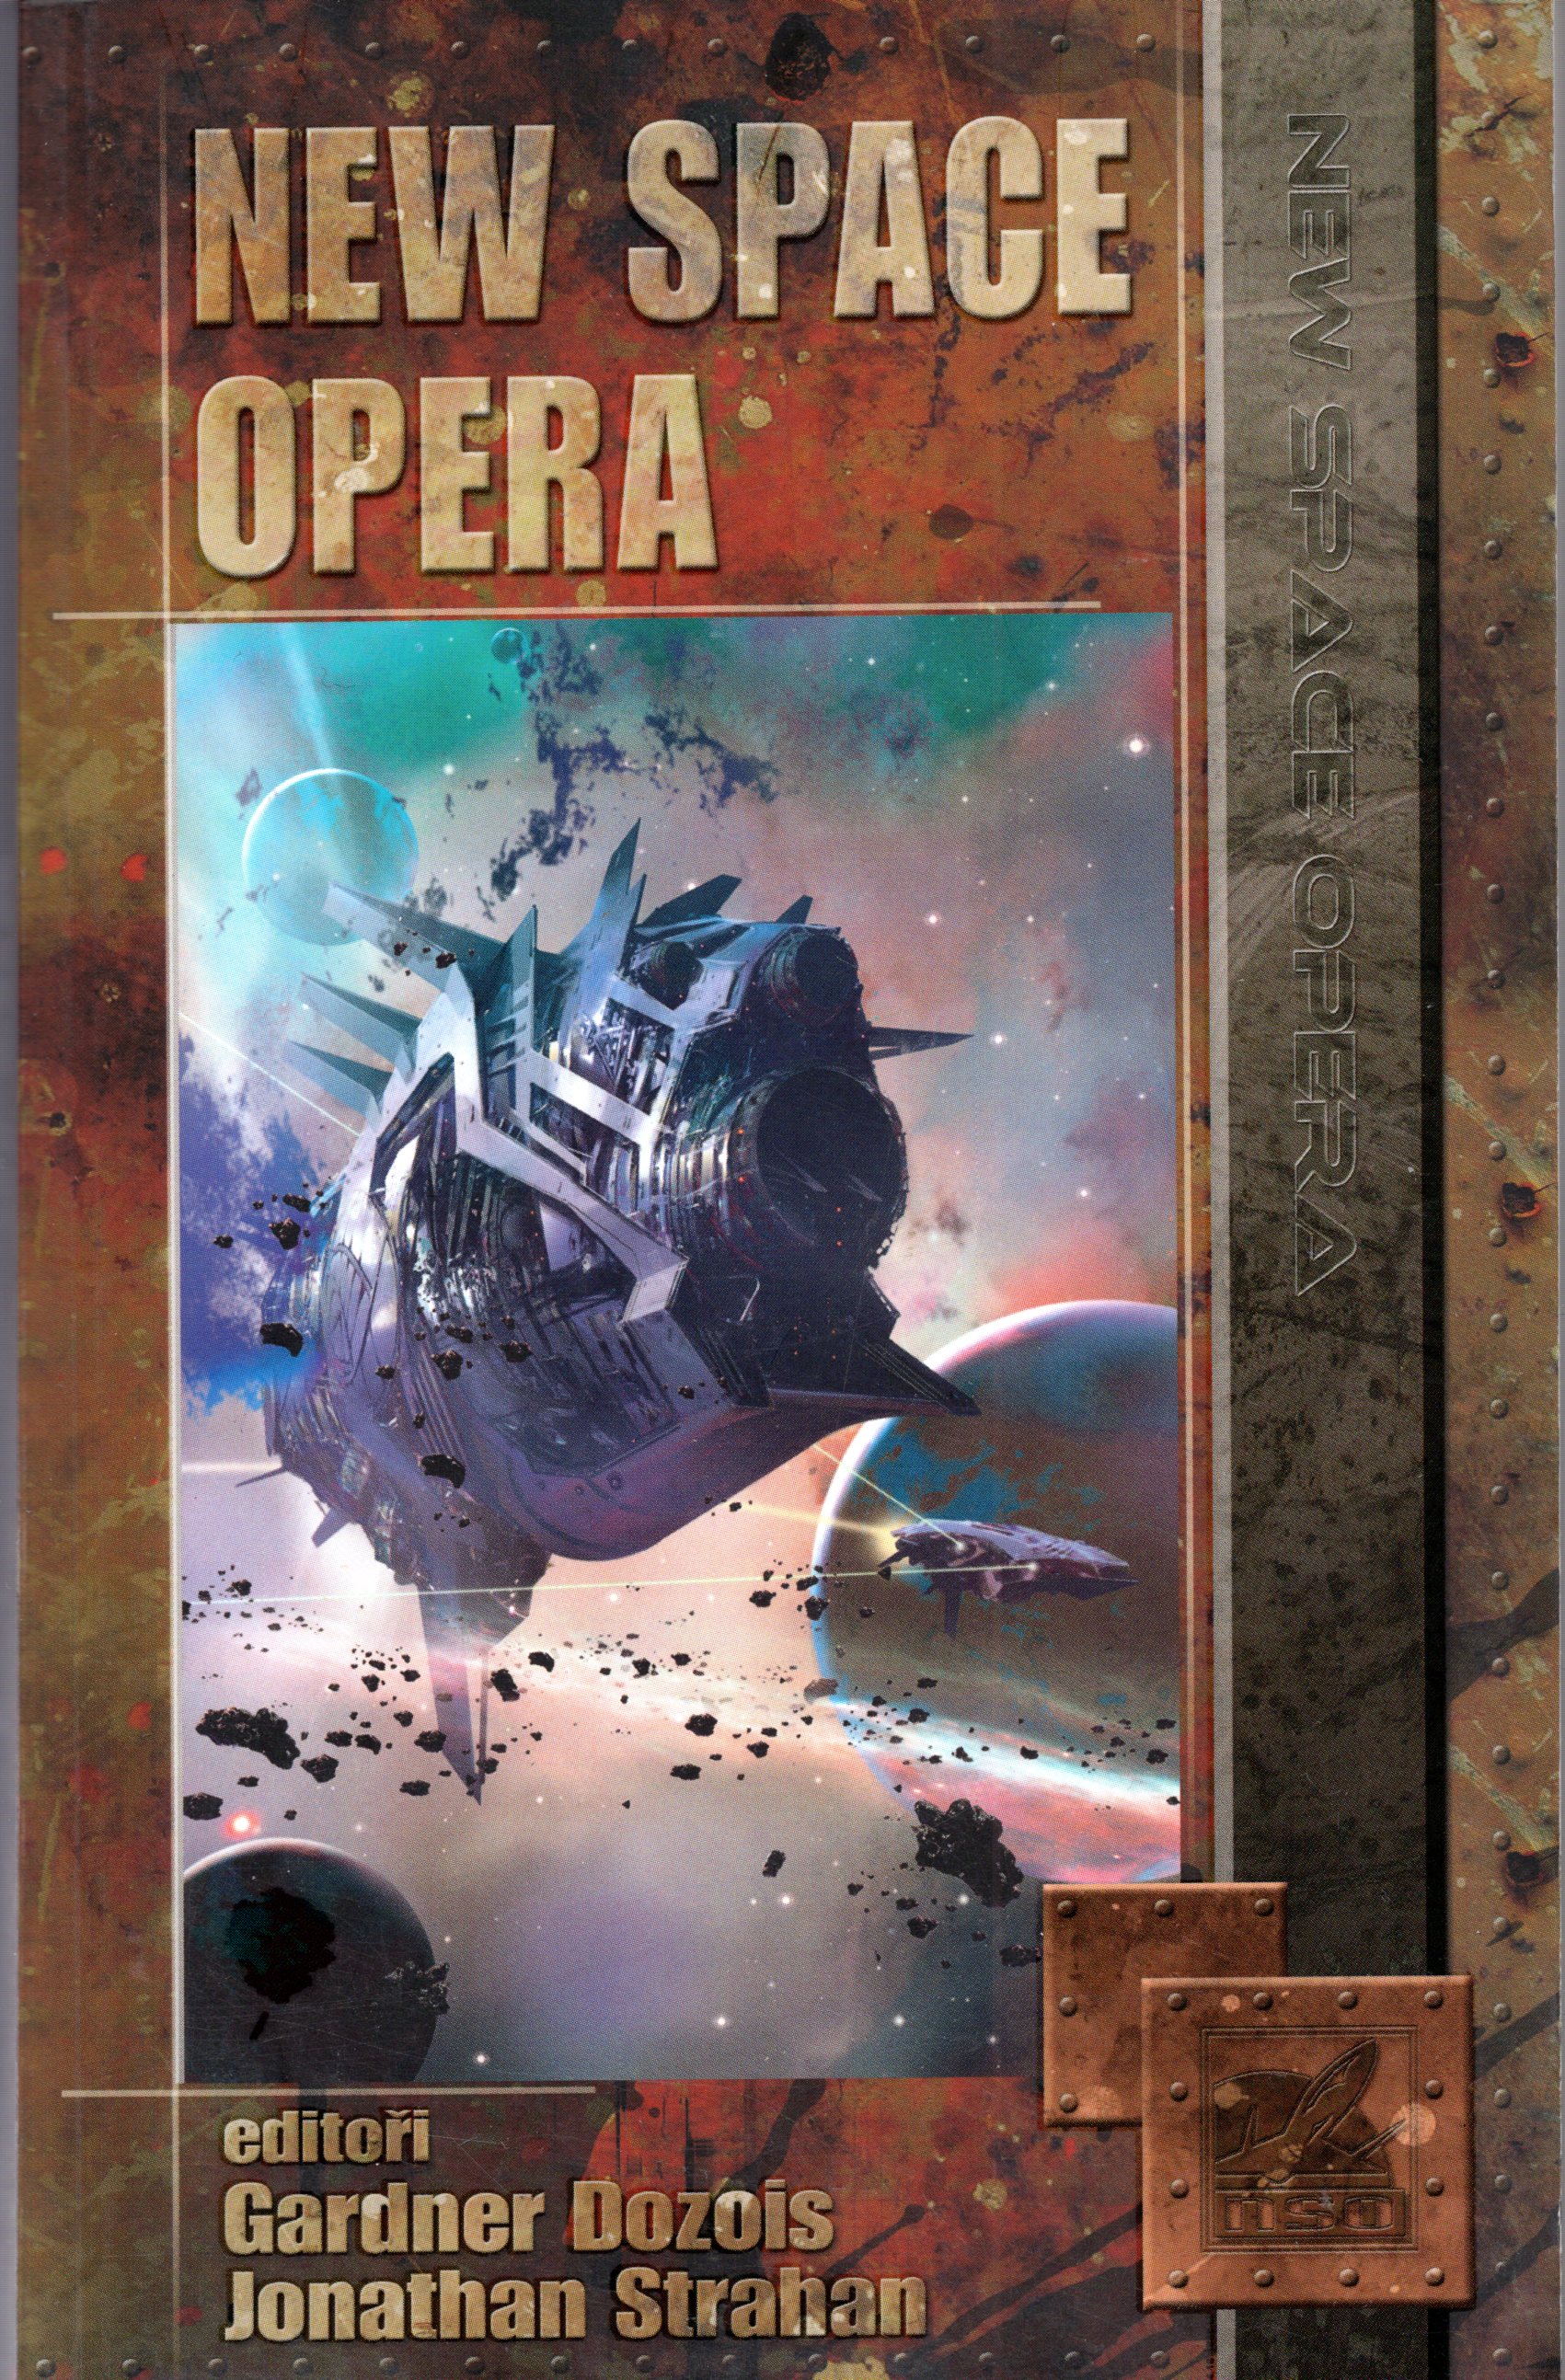 New Space Opera [Dozois Gardner]